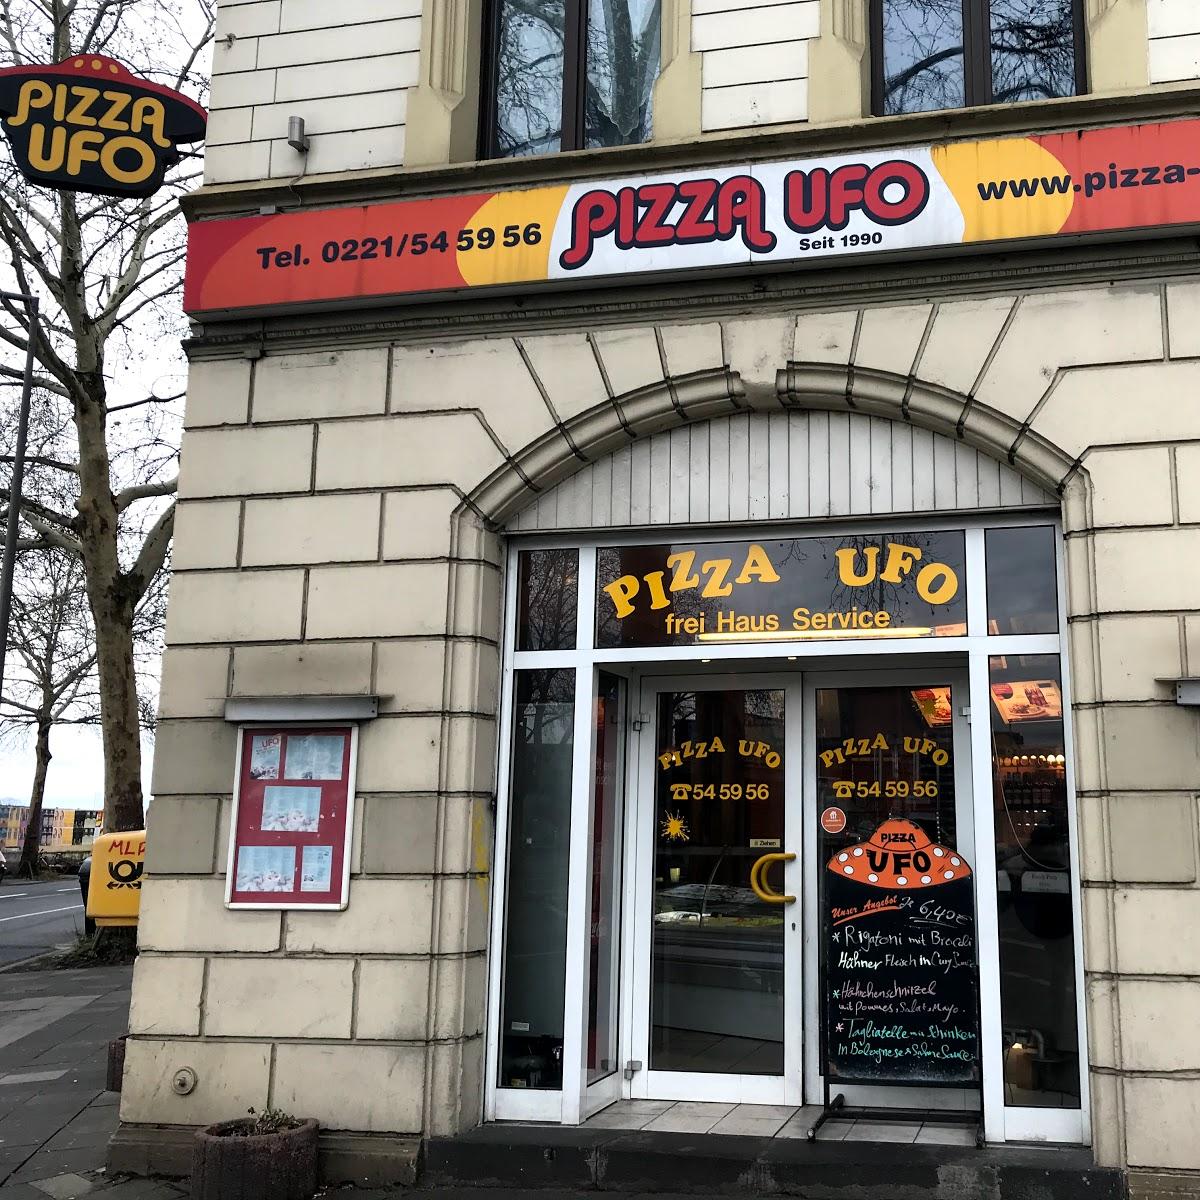 Restaurant "Pizza Ufo" in Köln